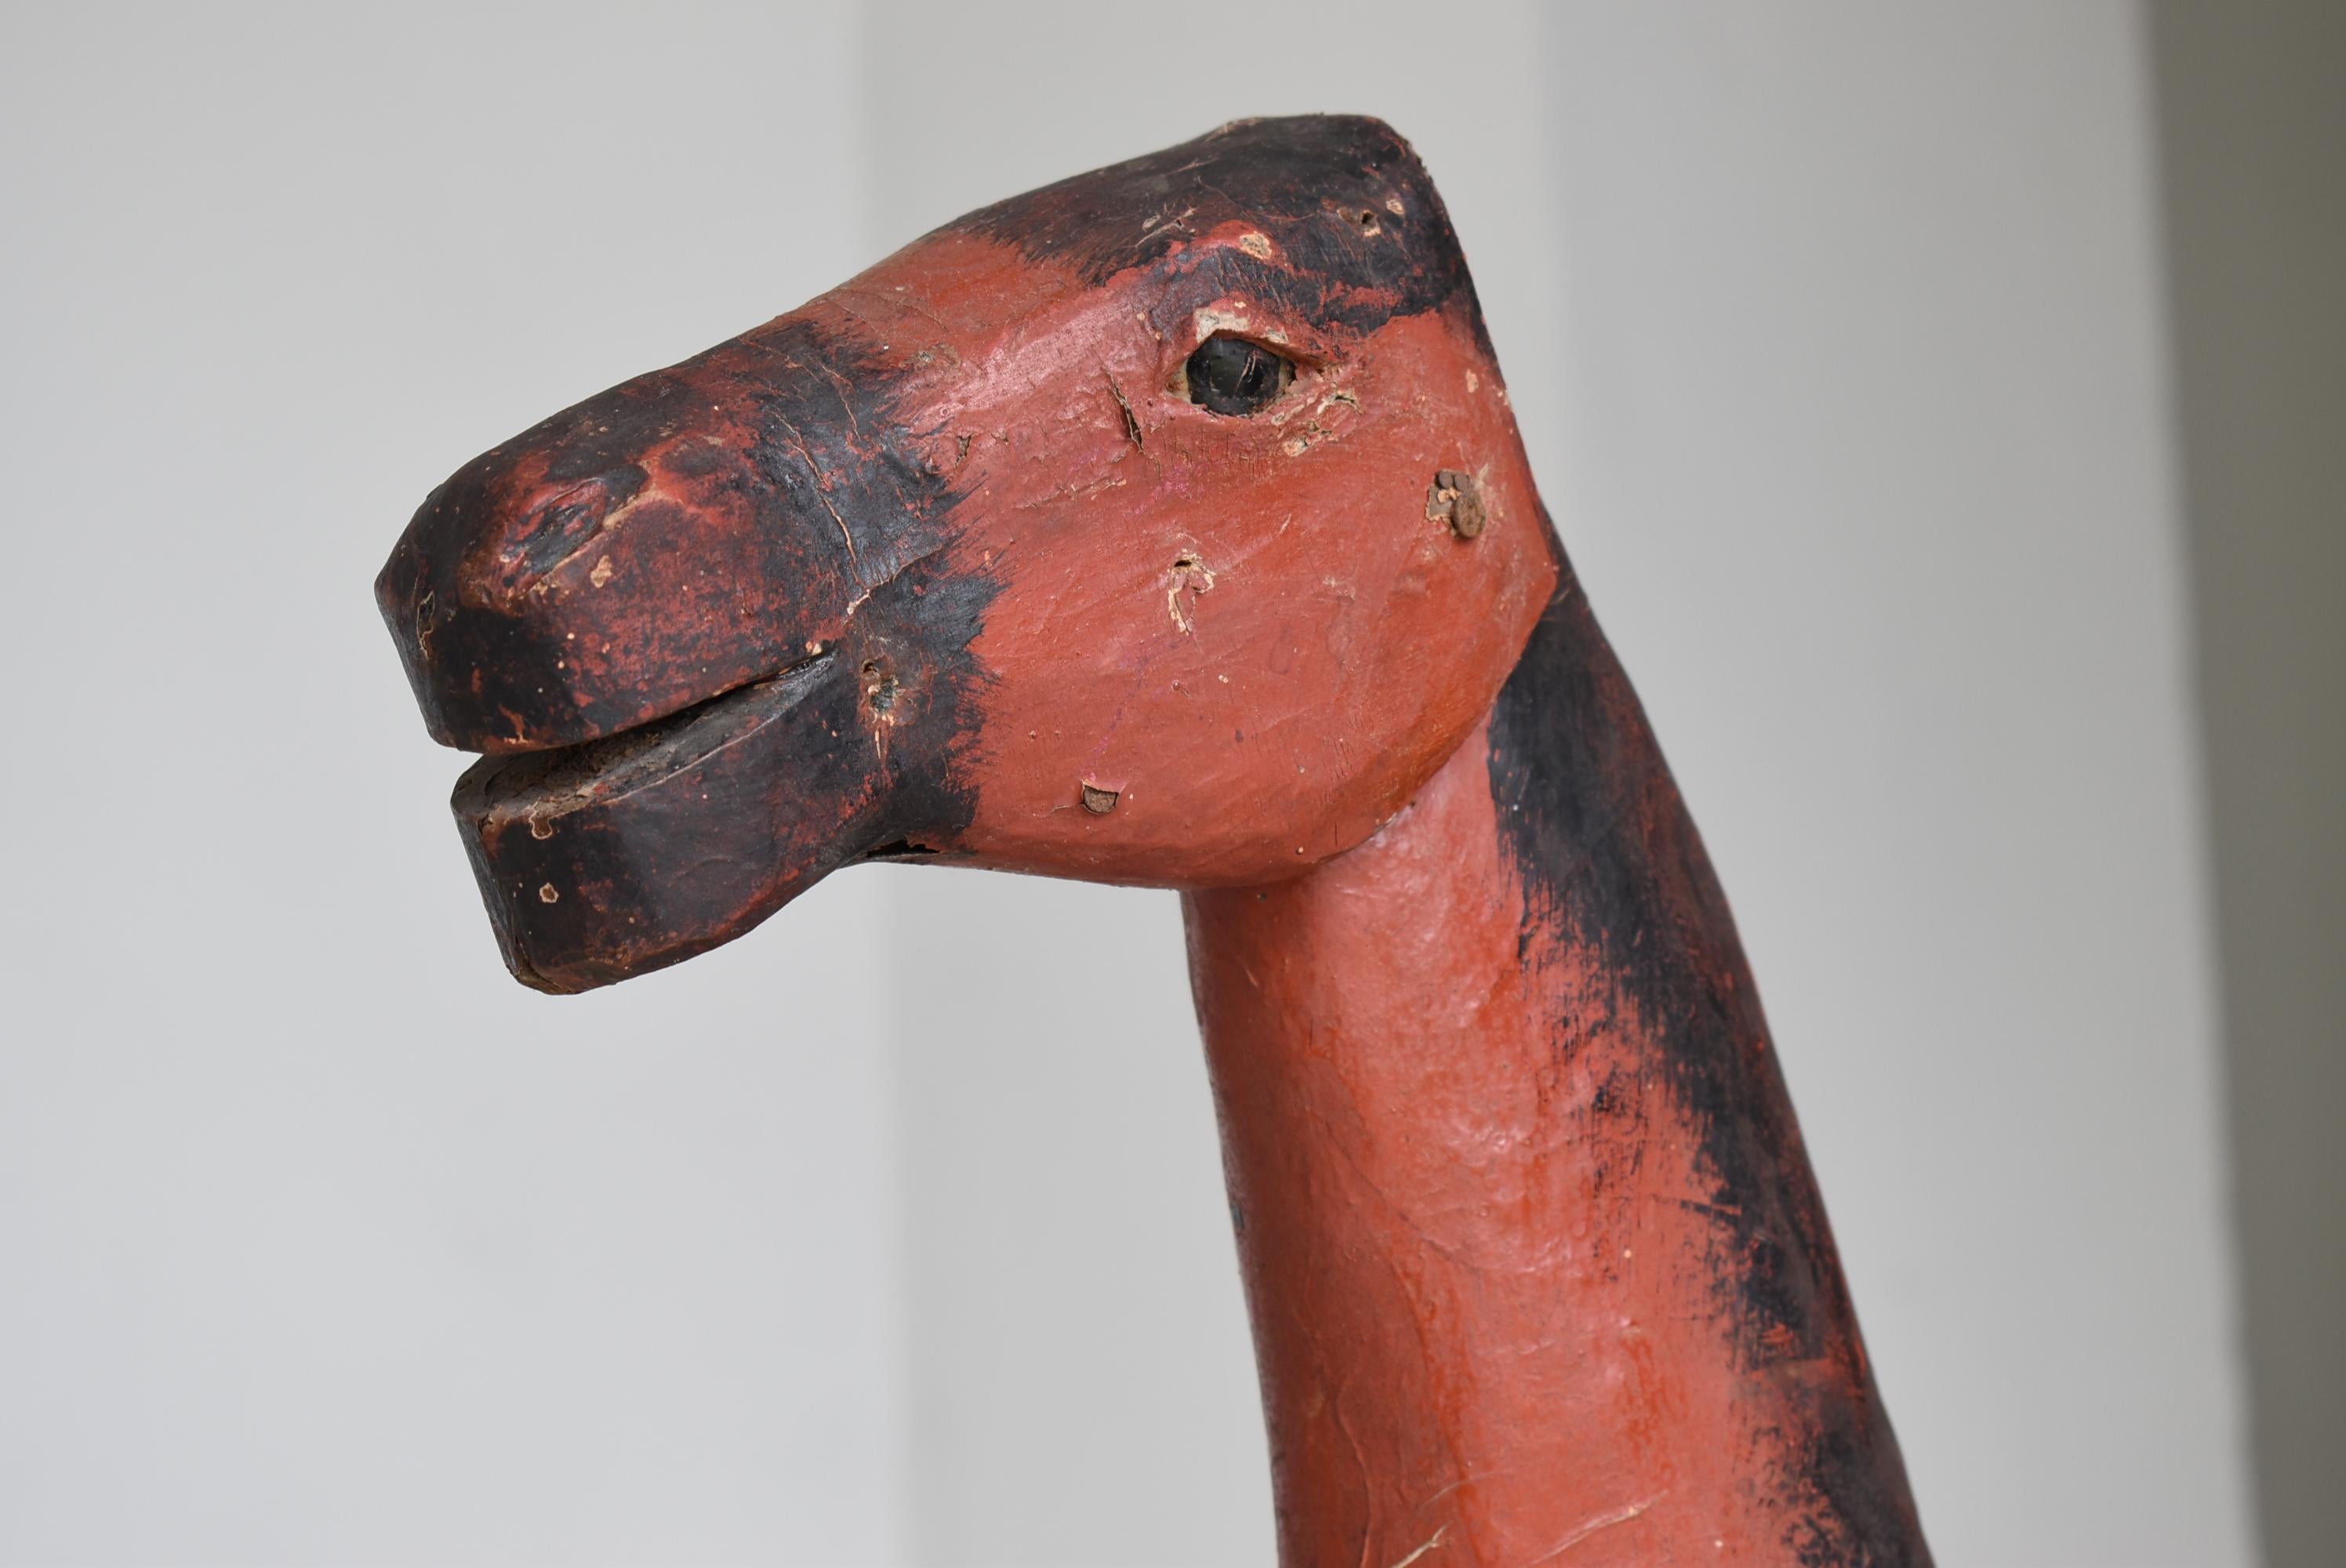 Edo Japanese antique Wood Carving Horse 1800s-1900s/Sculpture Figurine Wabisabi art